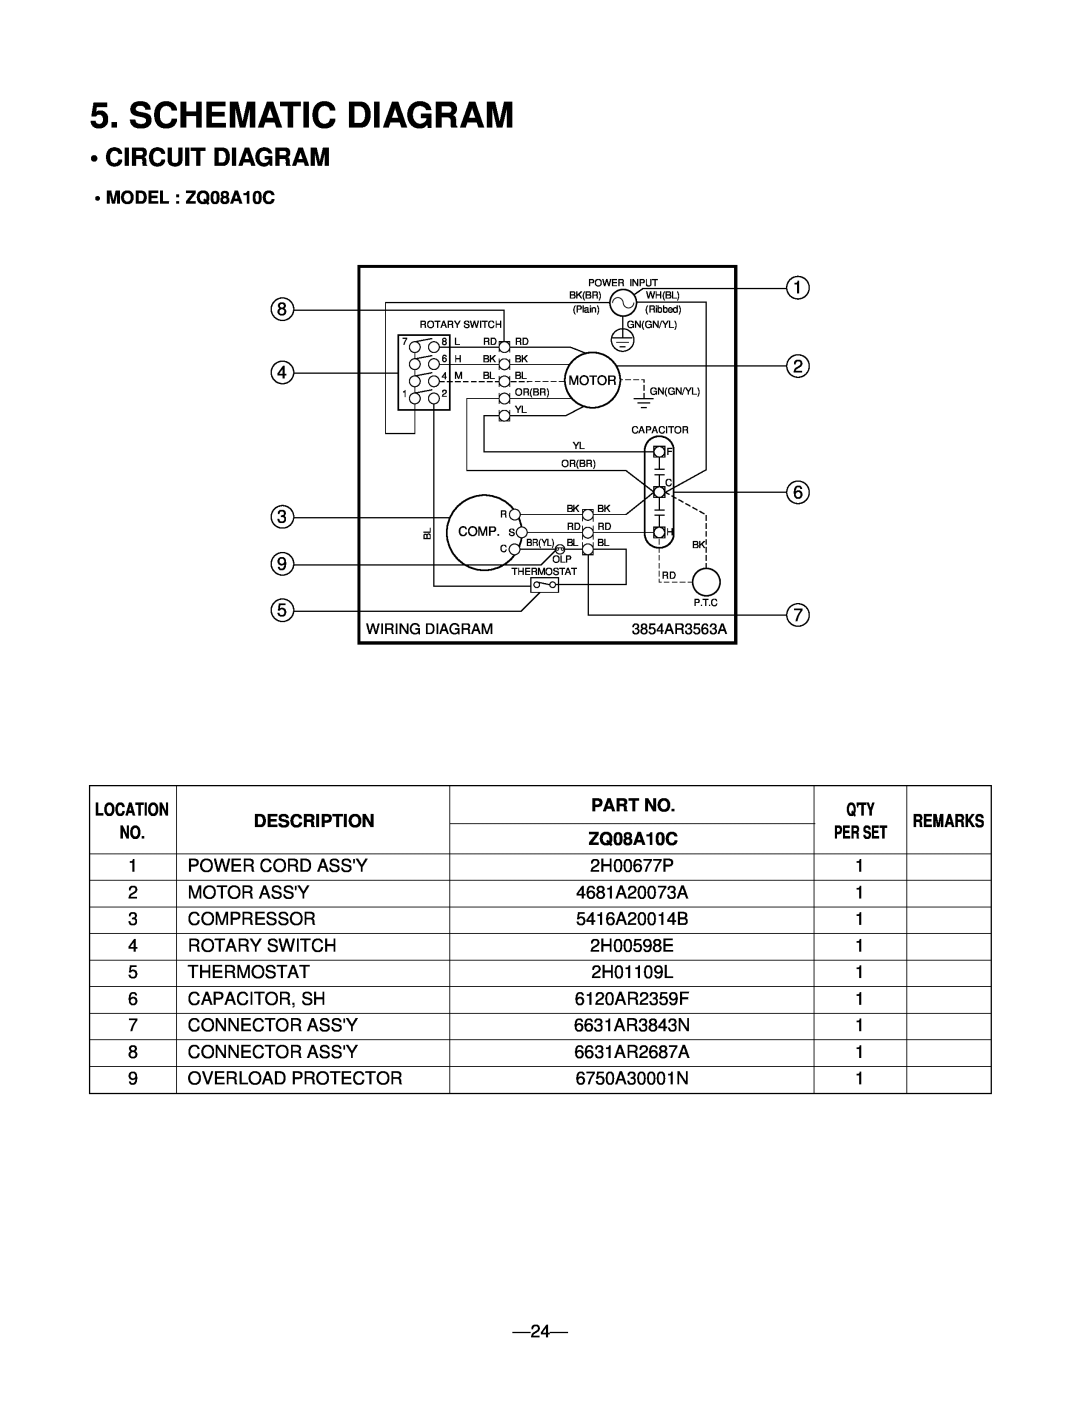 Friedrich manual Schematic Diagram, Circuit Diagram, MODEL ZQ08A10C, Description 